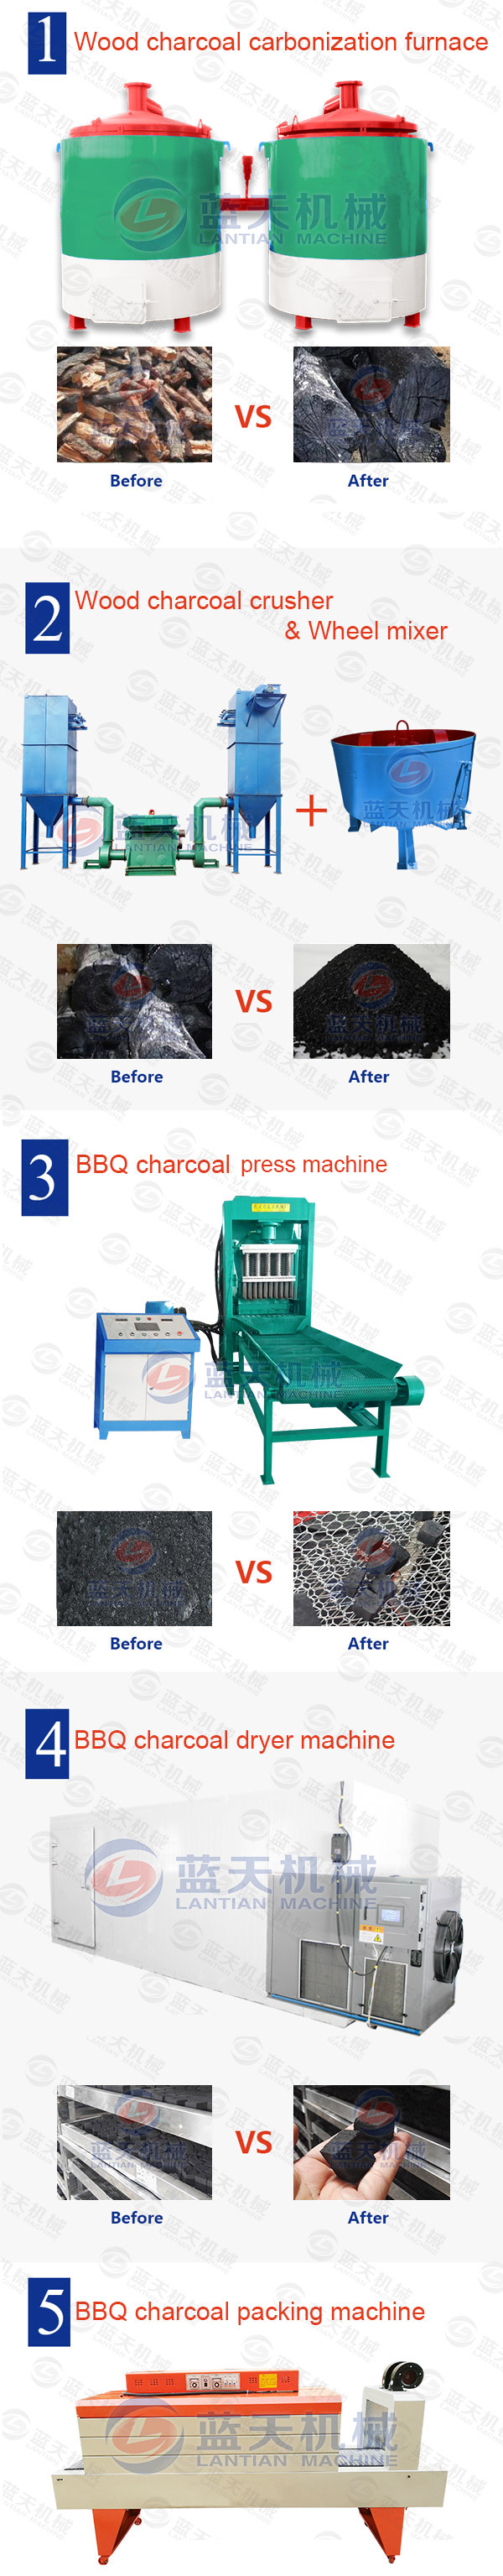 BBQ charcoal pressing equipment